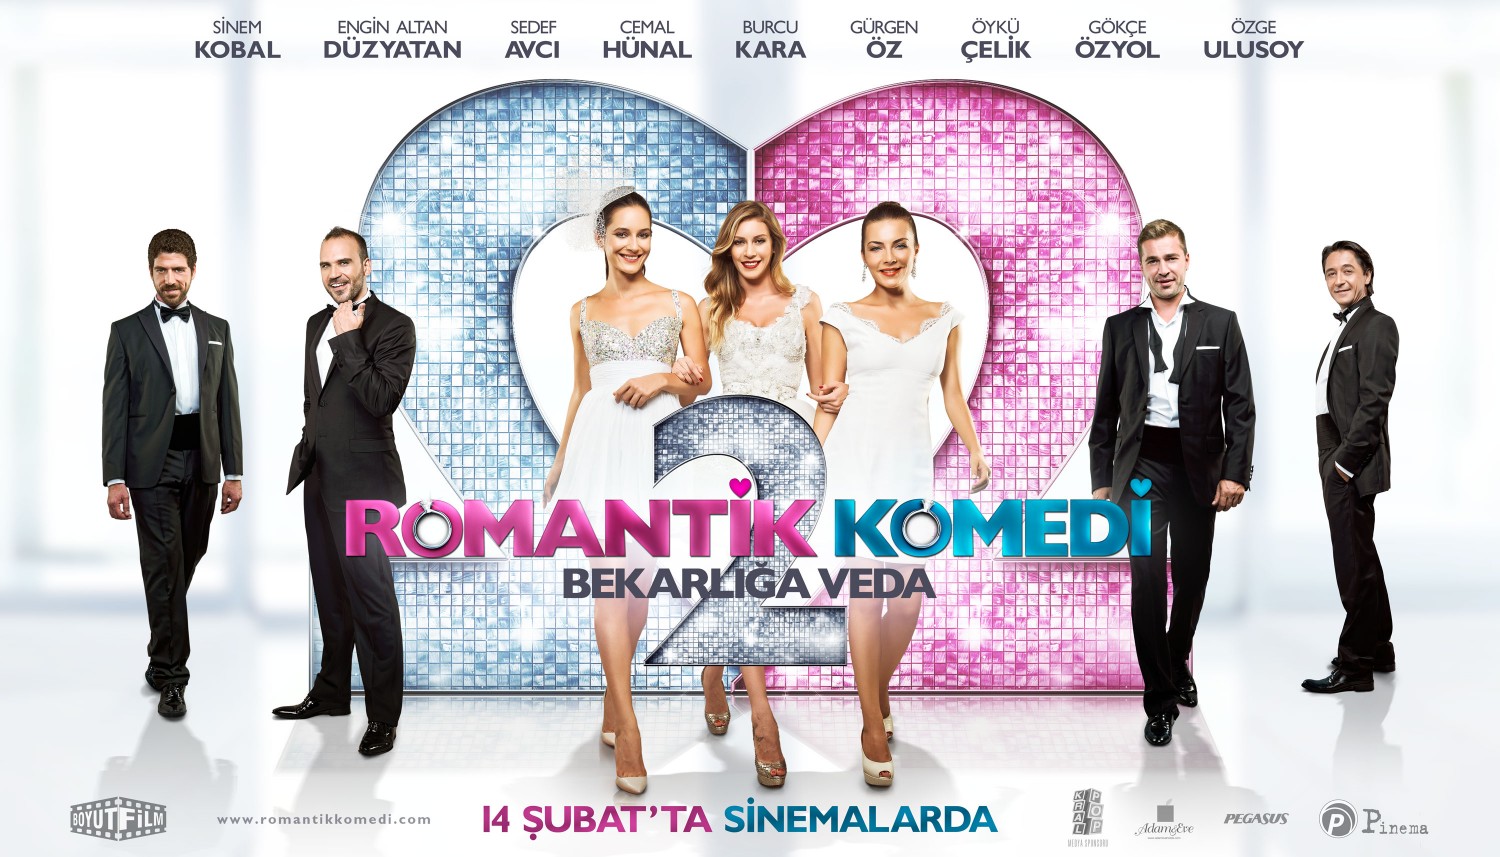 Extra Large Movie Poster Image for Romantik komedi 2: Bekarliga veda (#2 of 9)